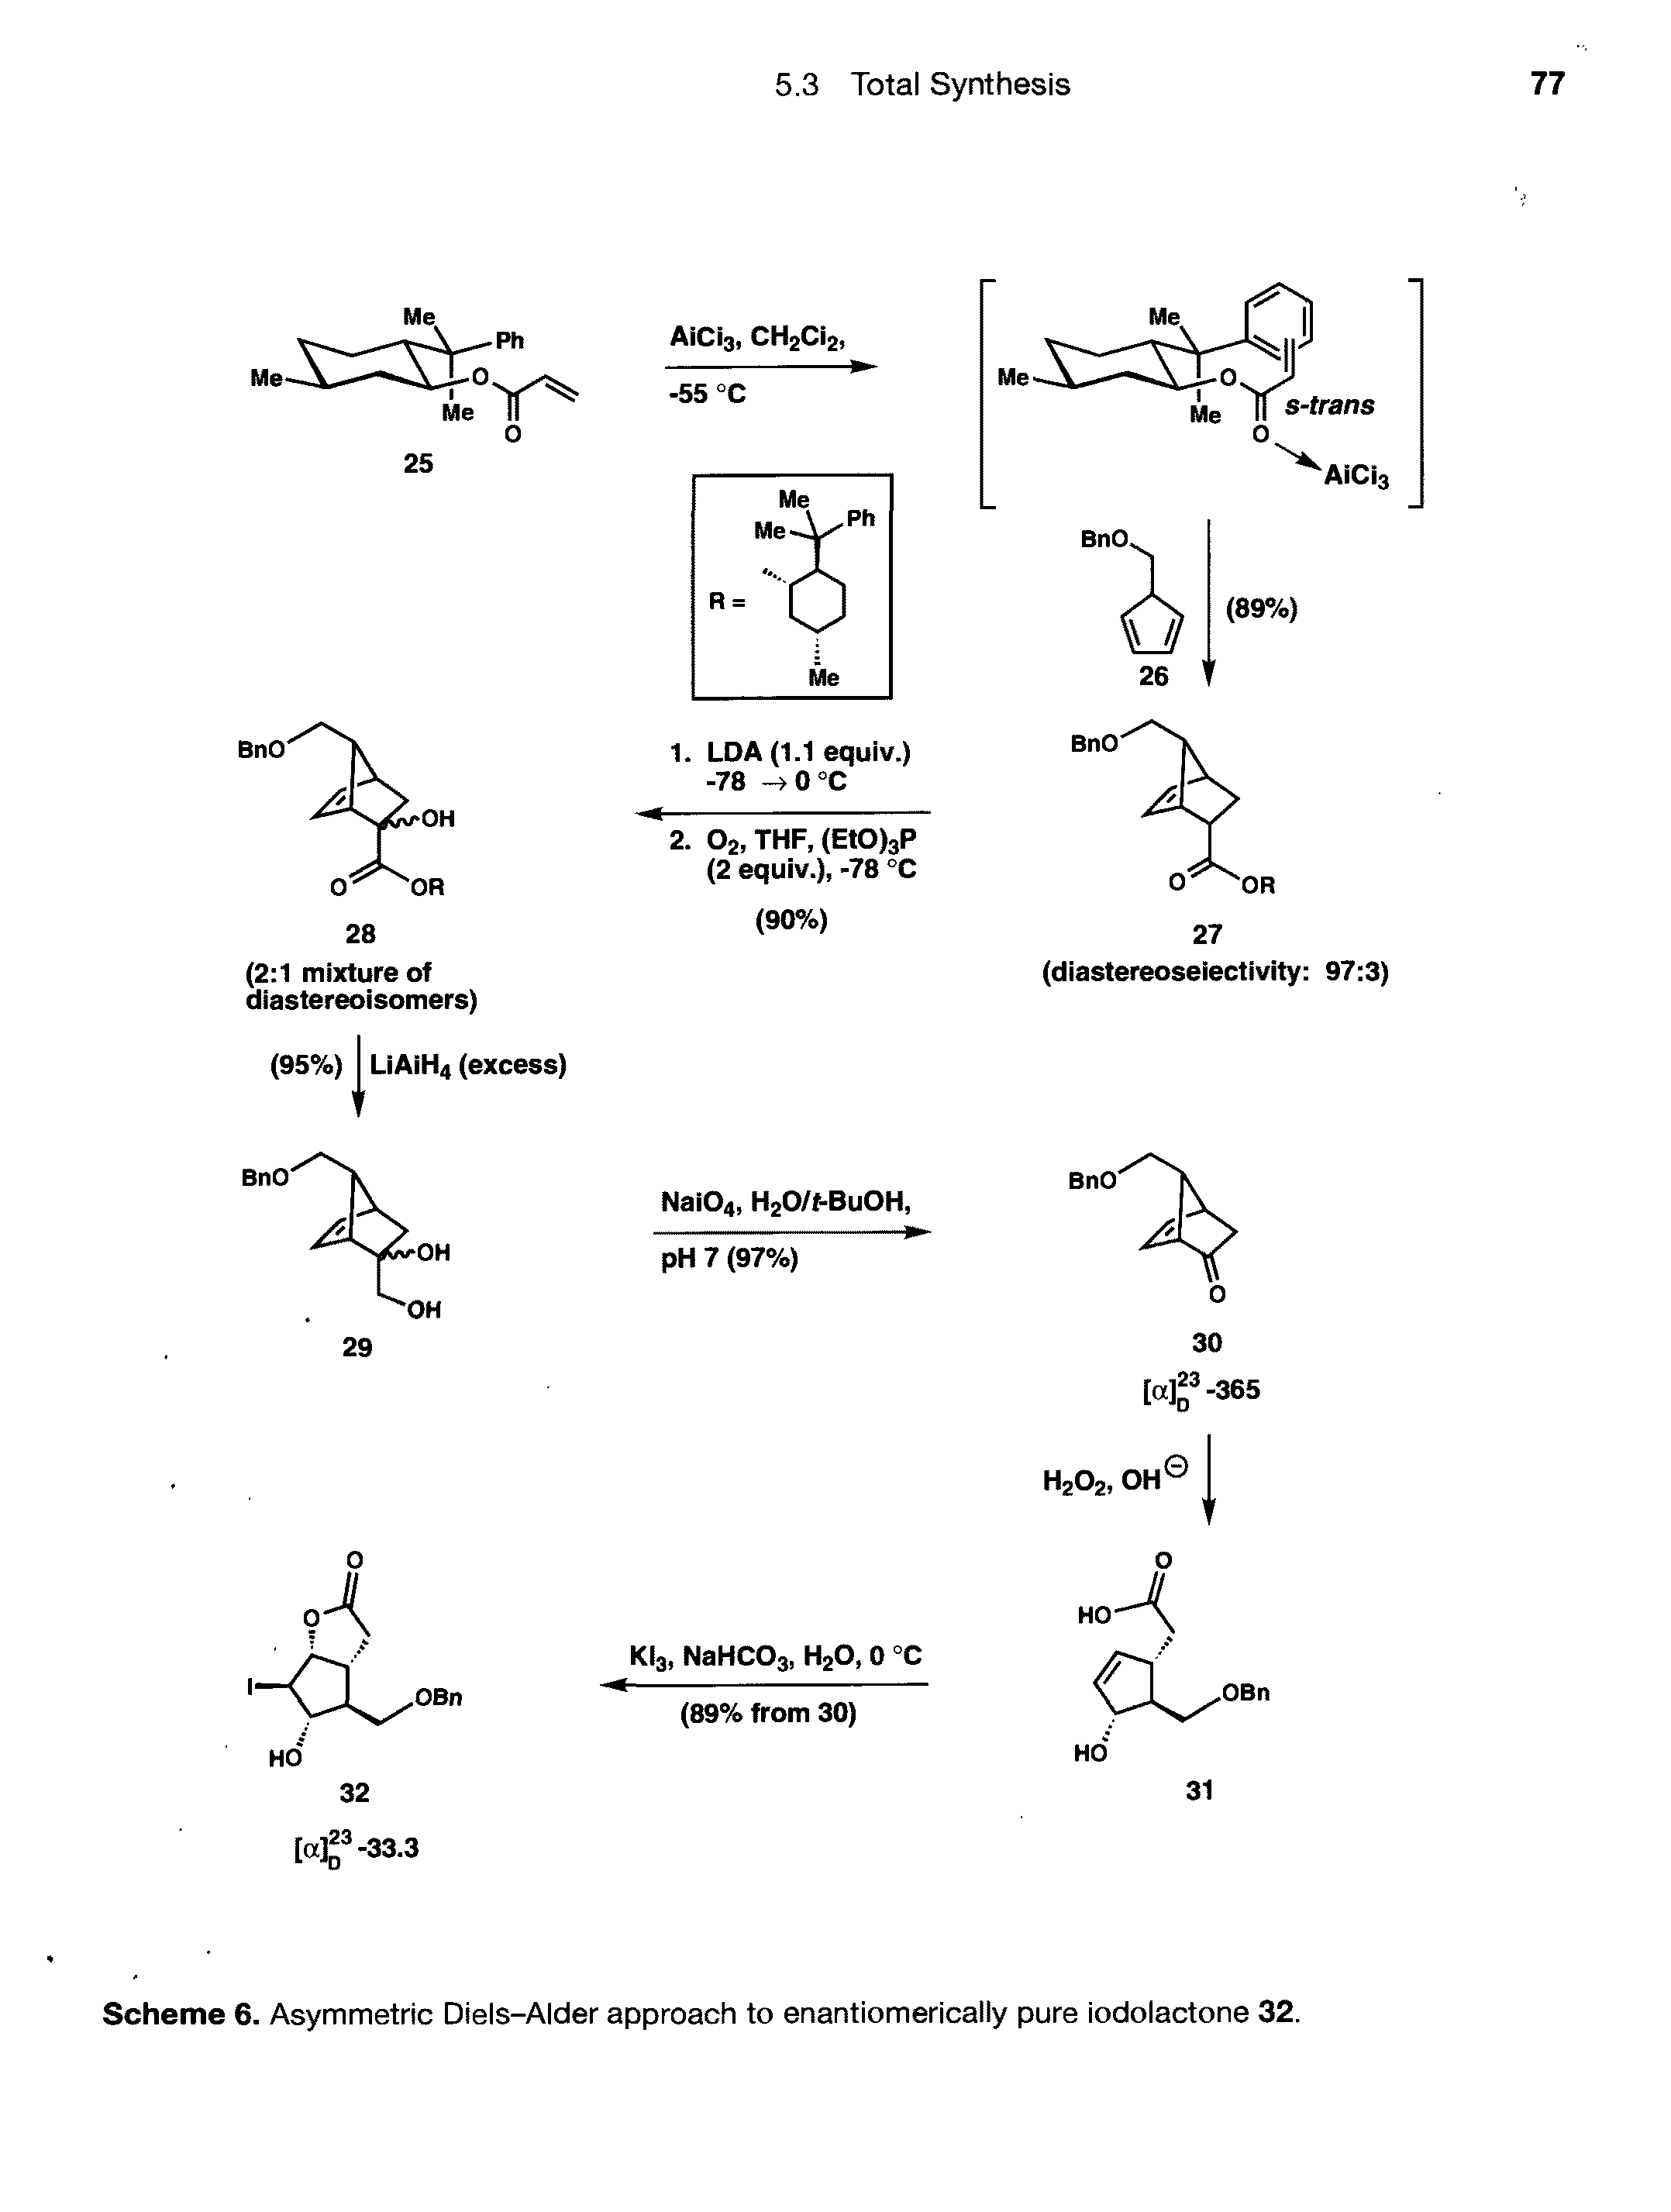 Scheme 6. Asymmetric Diels-Alder approach to enantiomerically pure iodolactone 32.